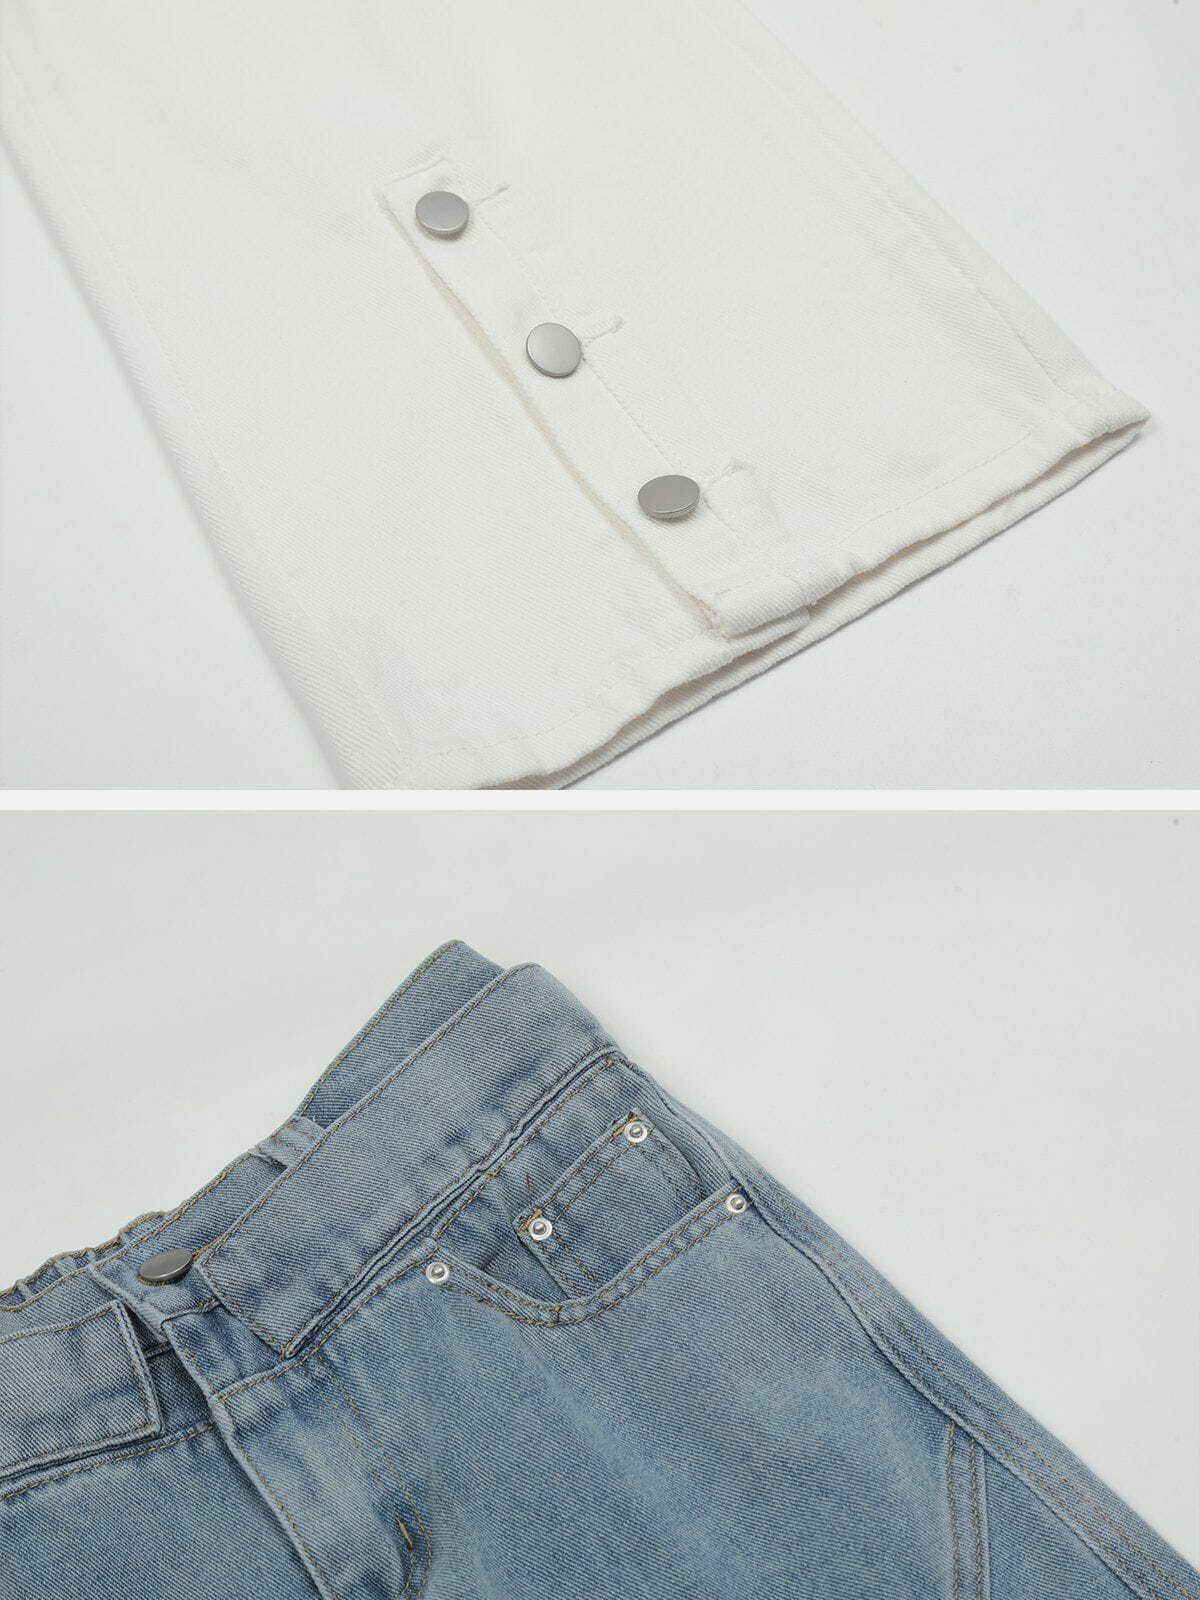 patchwork denim jeans vintage & edgy urban style 6500